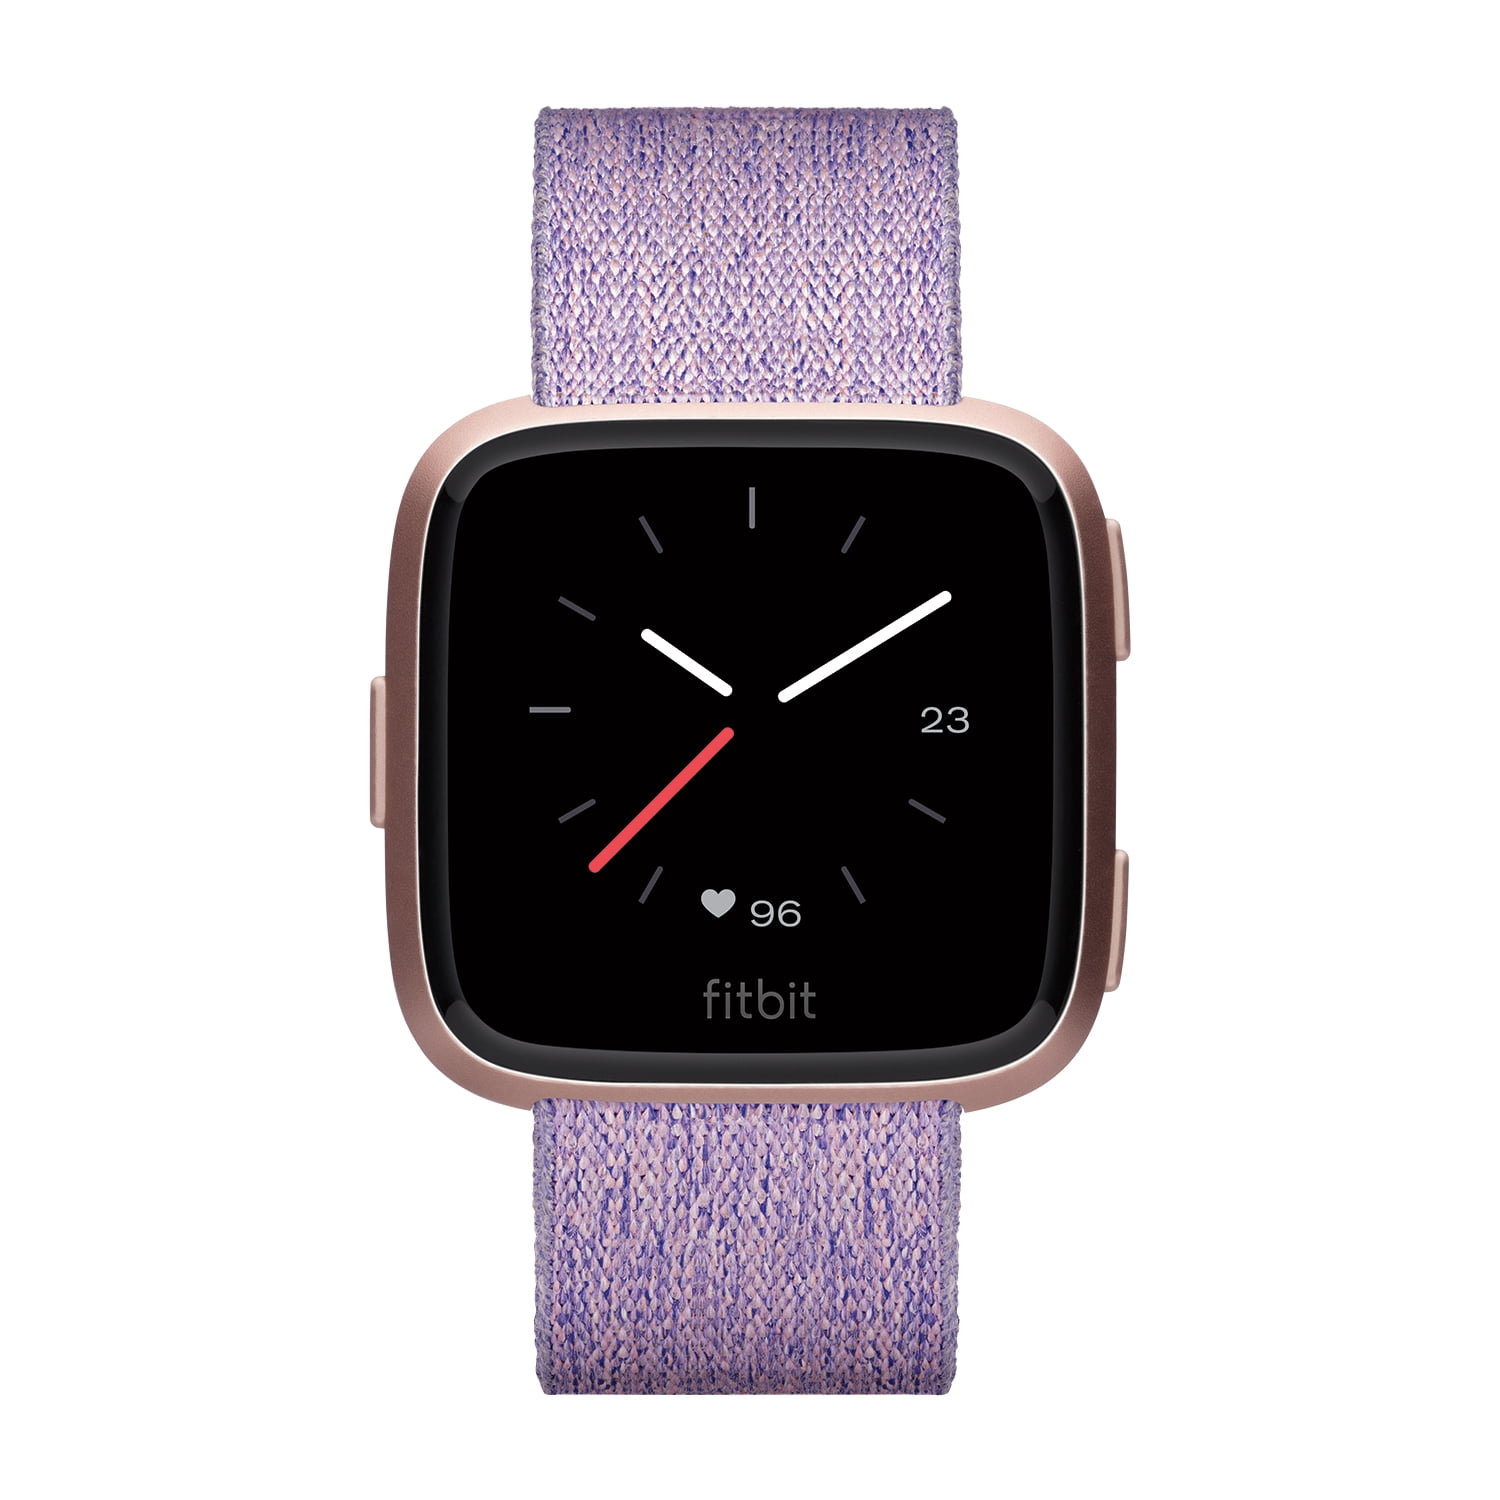 fitbit versa smartwatch special edition